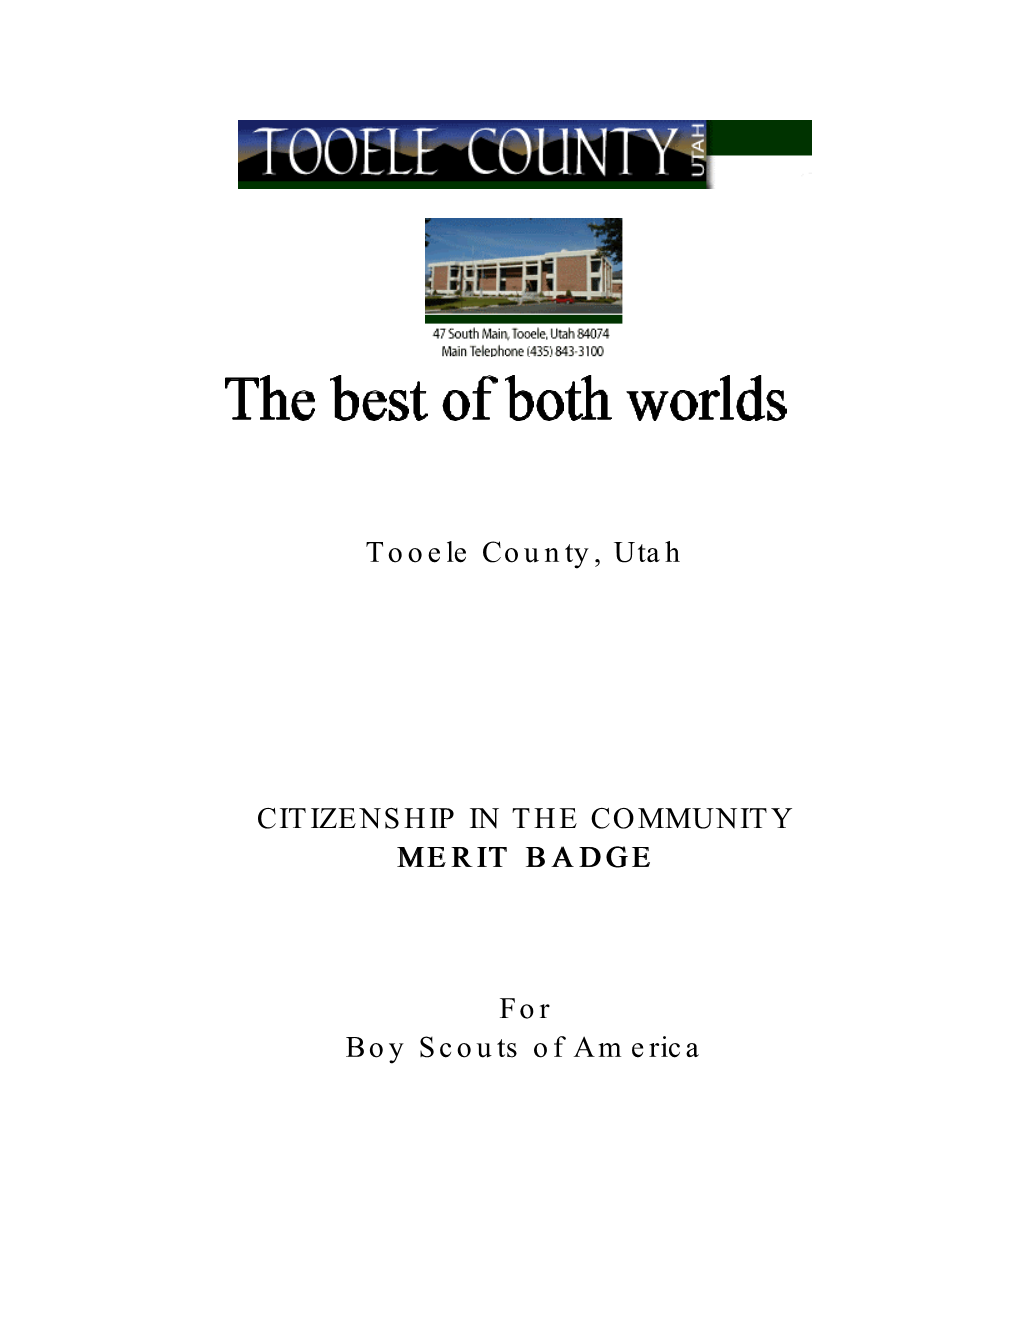 Tooele County, Utah CITIZENSHIP in the COMMUNITY MERIT BADGE